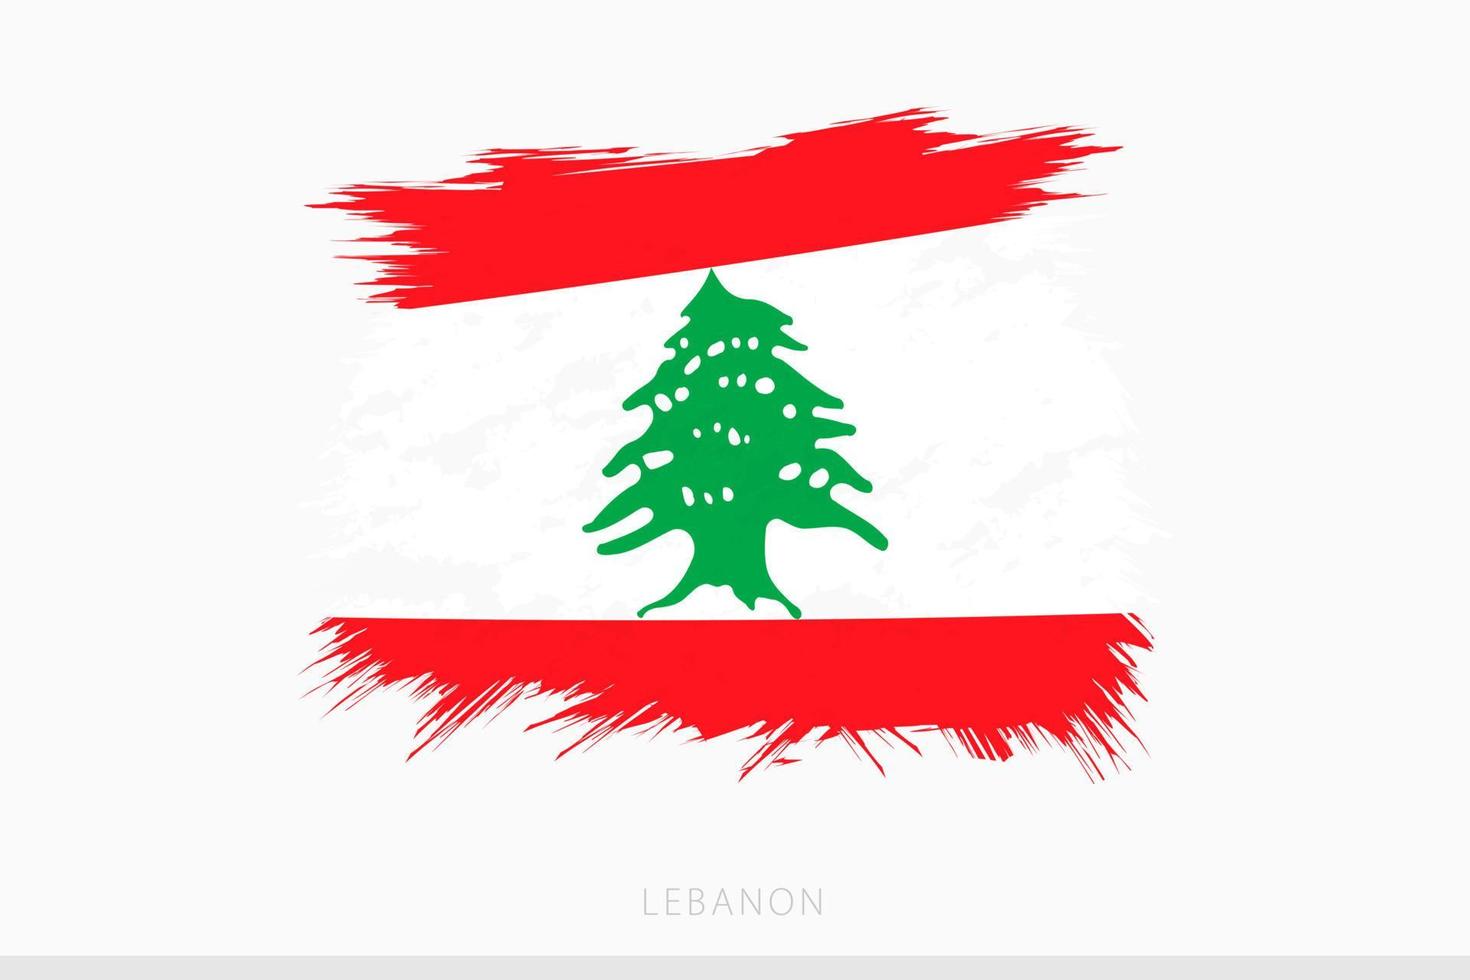 grunge flagga av Libanon, vektor abstrakt grunge borstat flagga av Libanon.